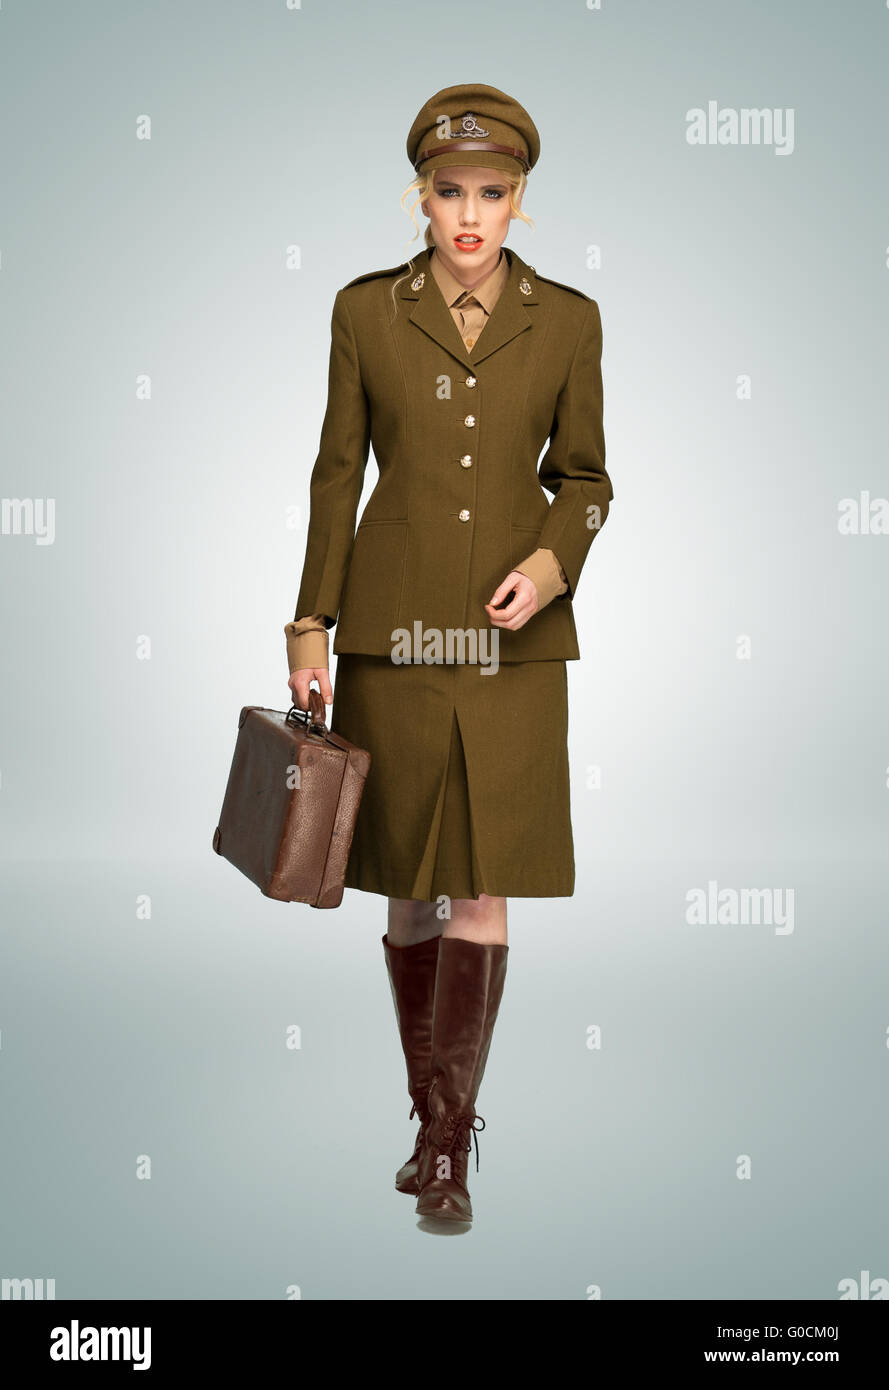 Glamorous woman in military uniform Stock Photo